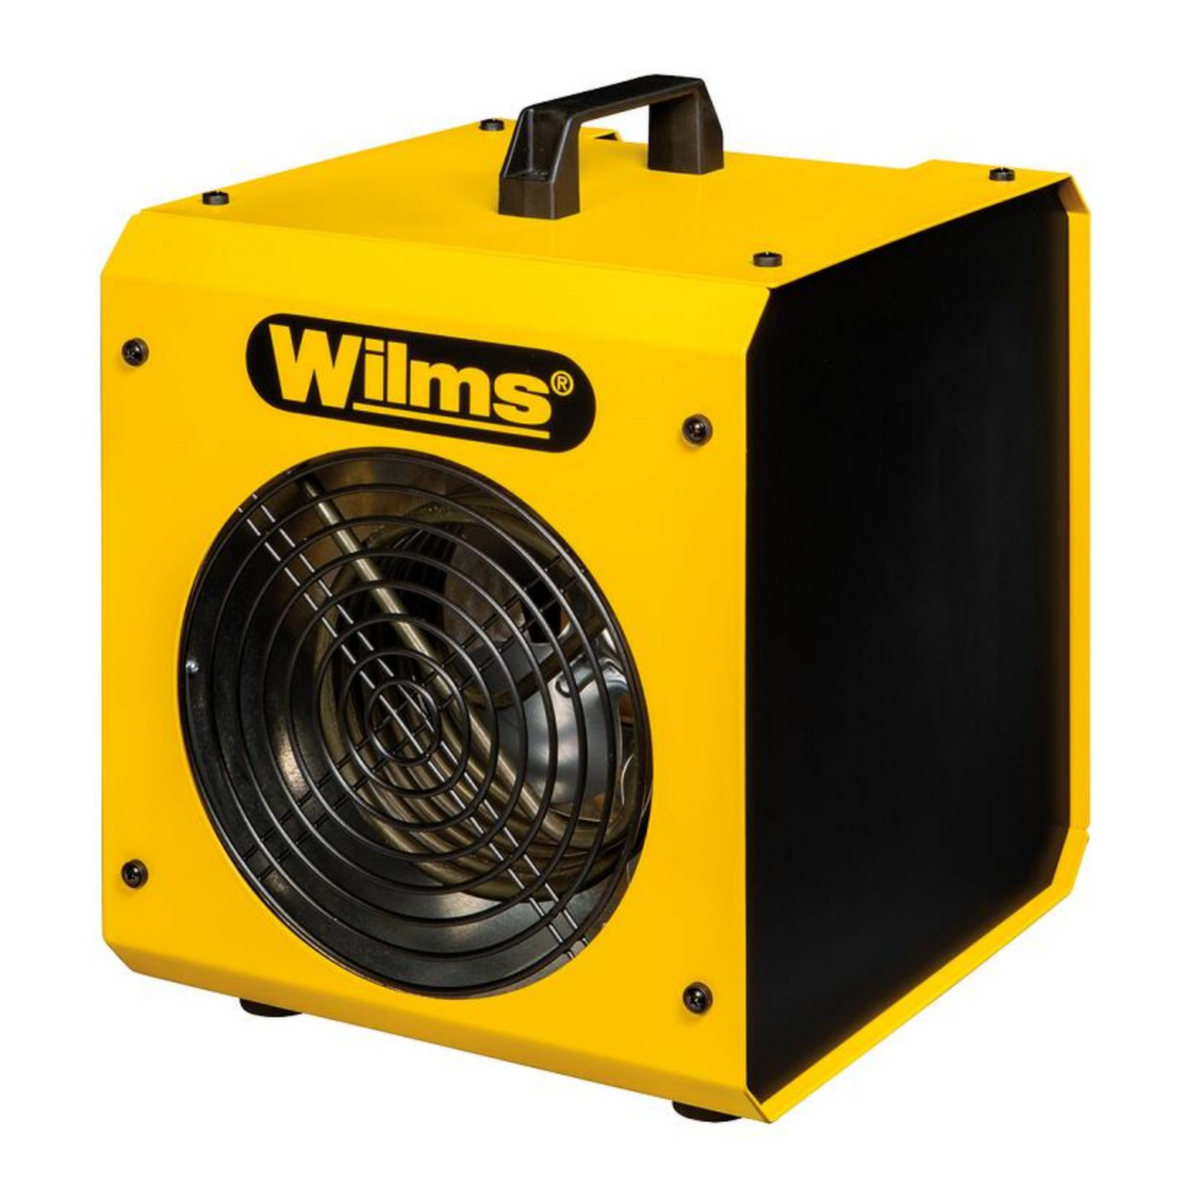 Wilms Elektroheizer EL4 Standard 1 ZOOM